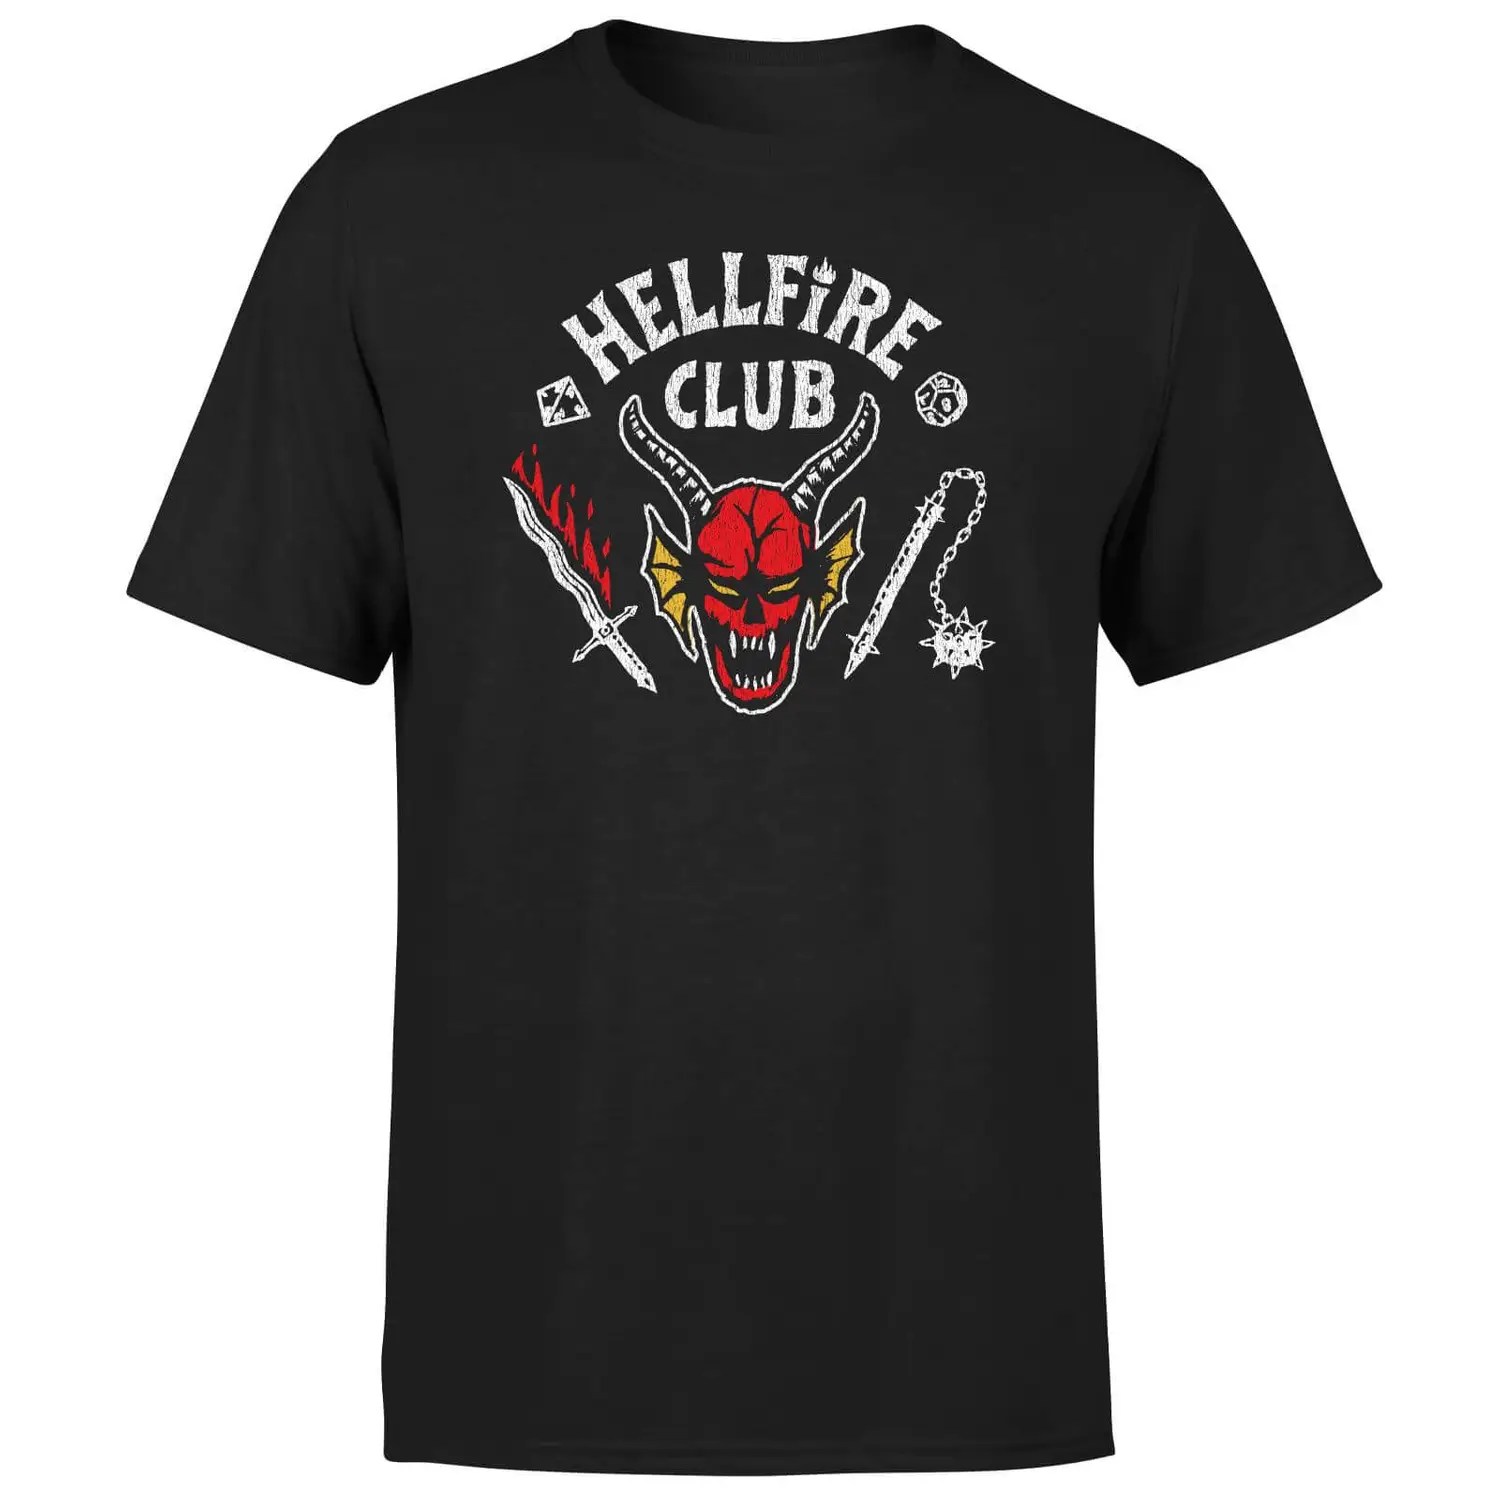 An all black edition of the Hellfire Club t-shirt.